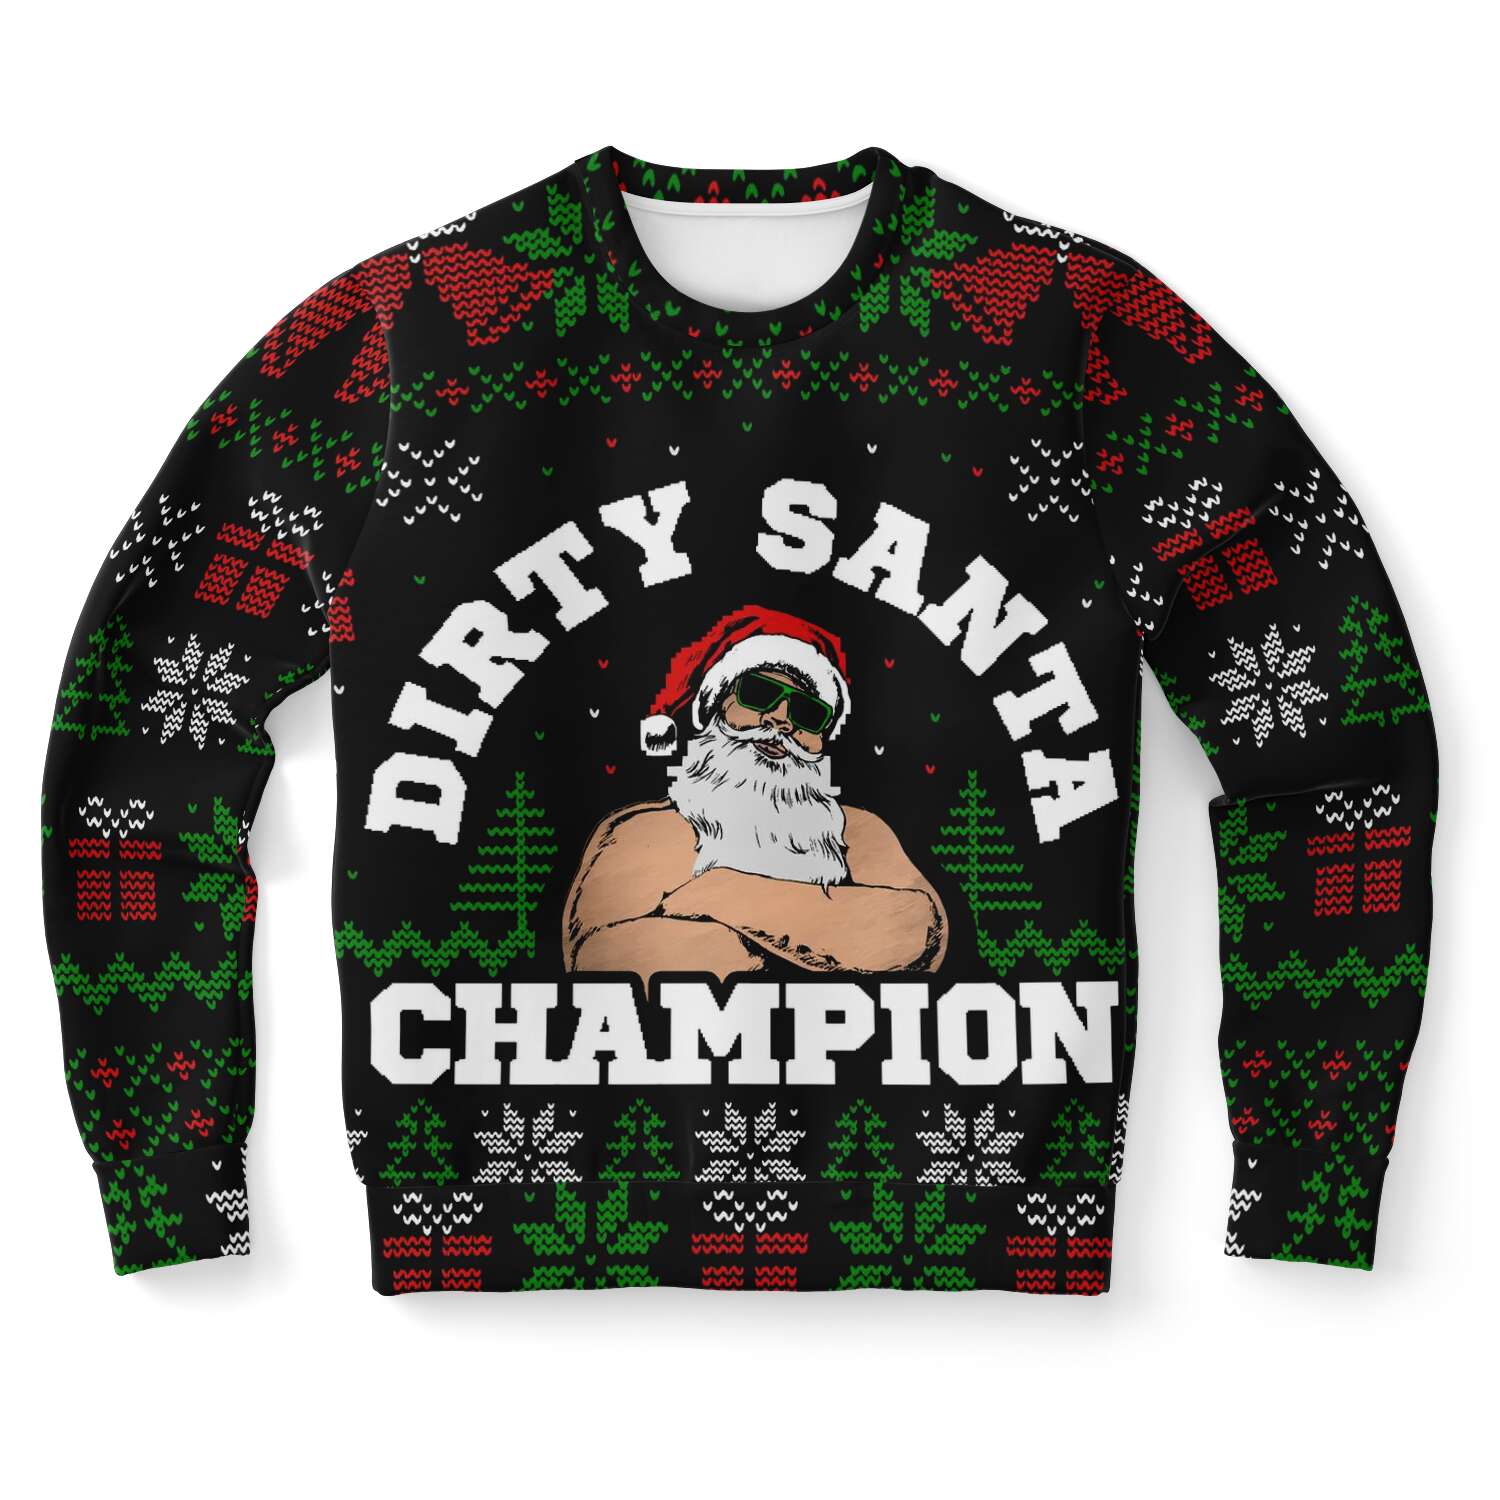 Dirty Santa Sweater